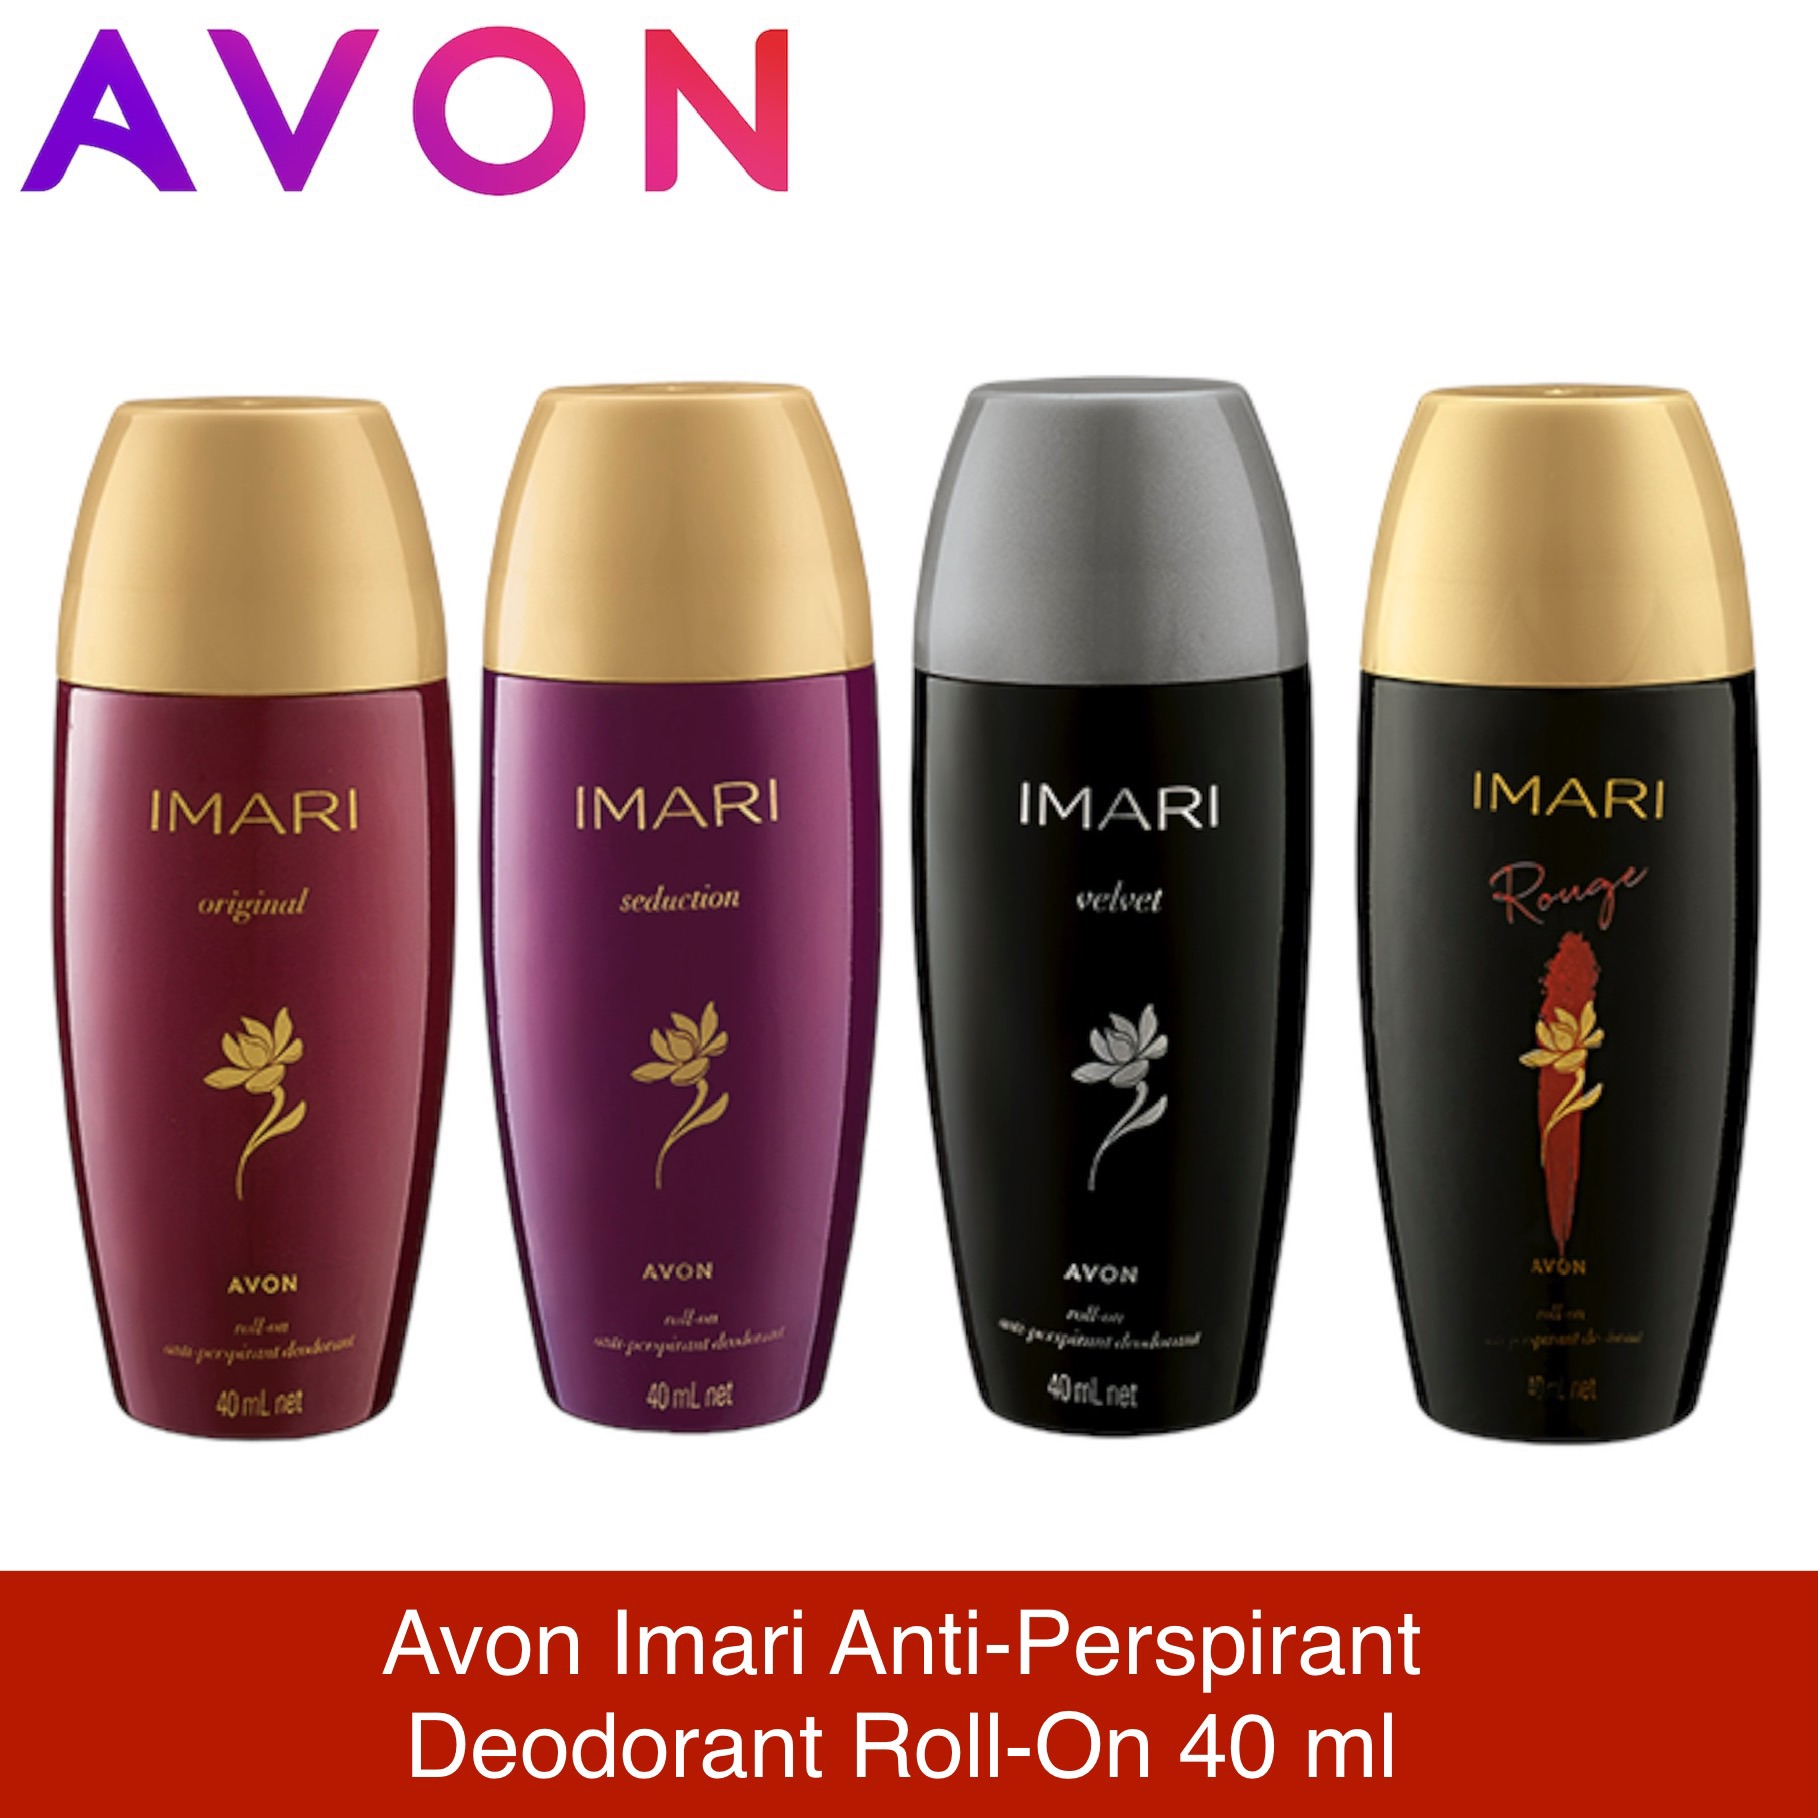 AVON Imari Roll-On Deodorant for Women, 40ml